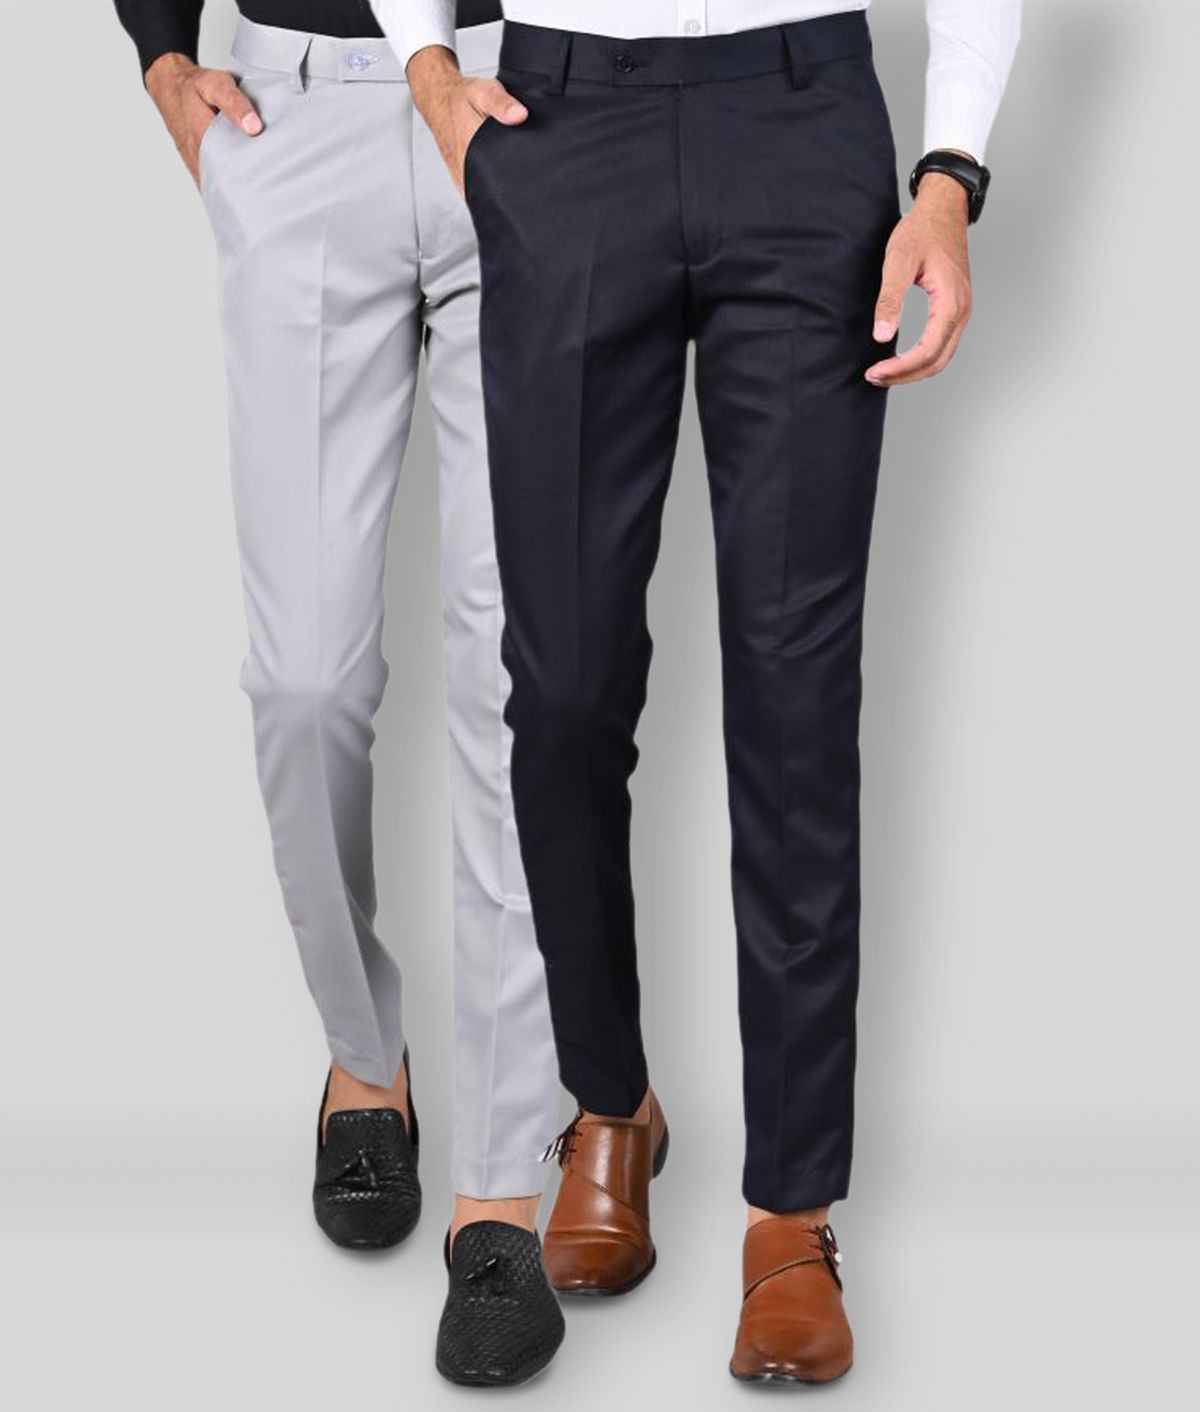     			MANCREW - Navy Blue Polycotton Slim - Fit Men's Formal Pants ( Pack of 2 )